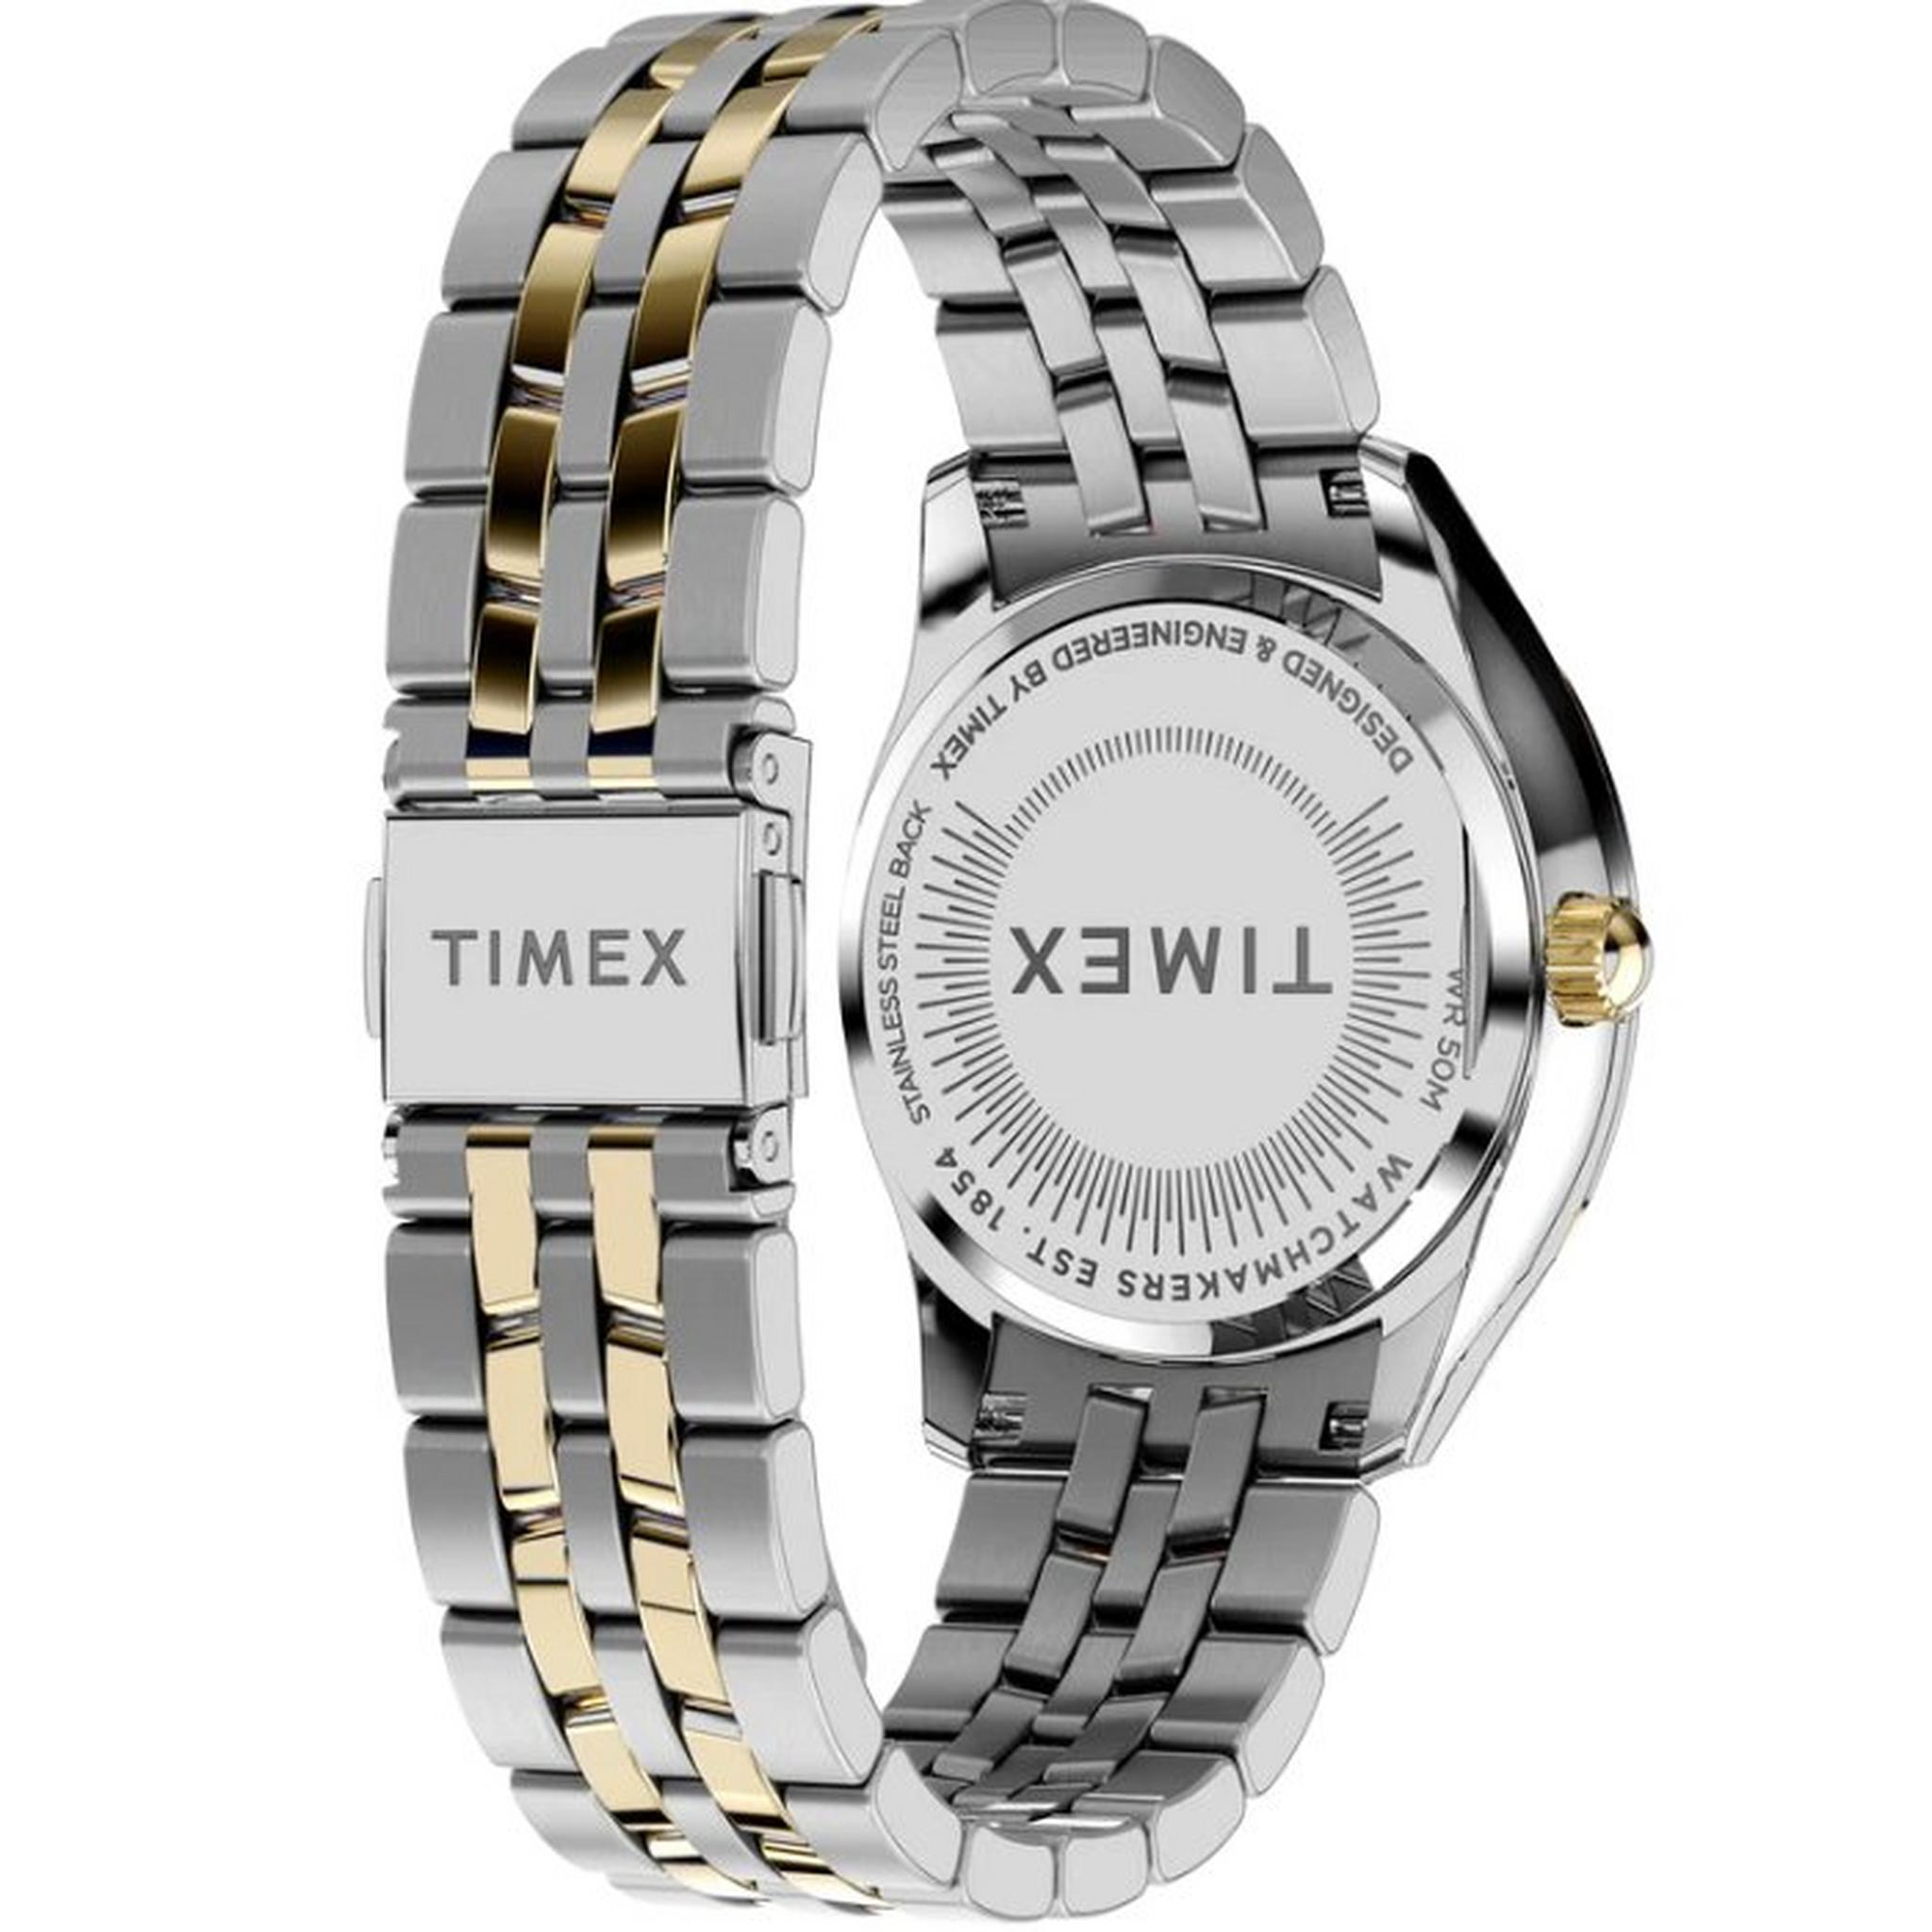 Timex Ariana Women’s Watch, 36mm, Stainless Steel Strap, Analog, TW2W17900 – Silver/Gold